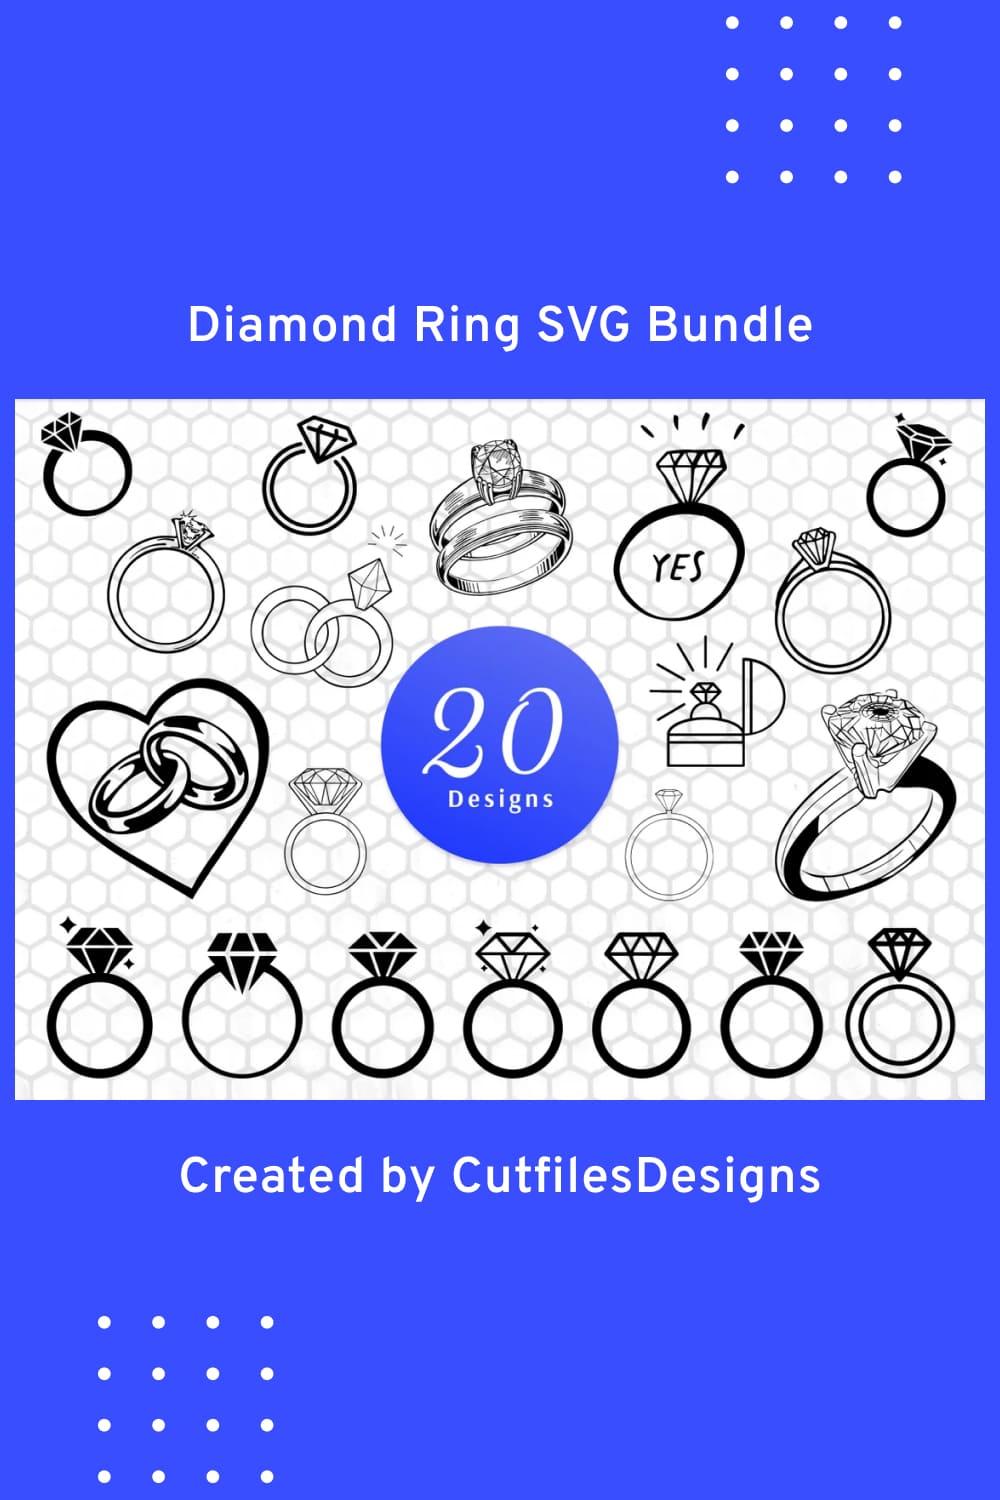 Diamond Ring SVG Bundle.